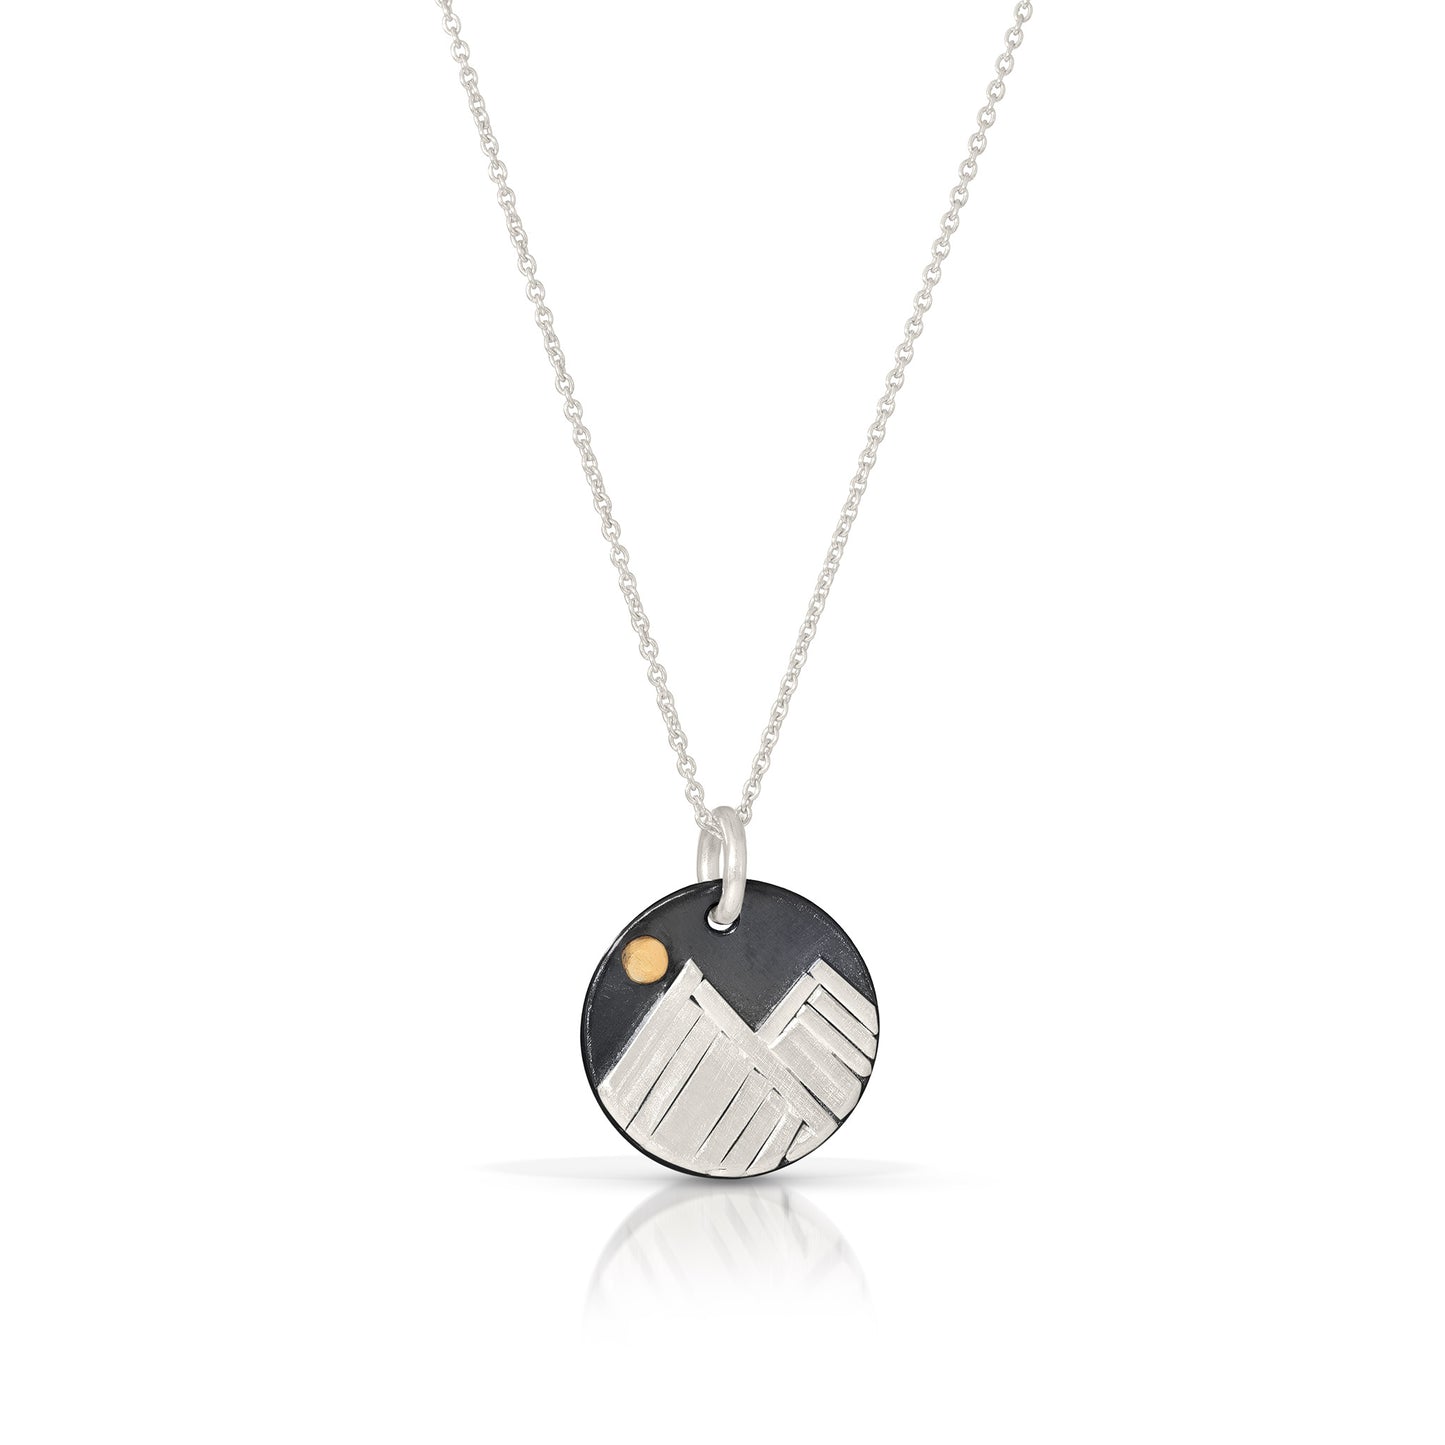 Silver Mini Mountain necklace by Jen Lesea Designs